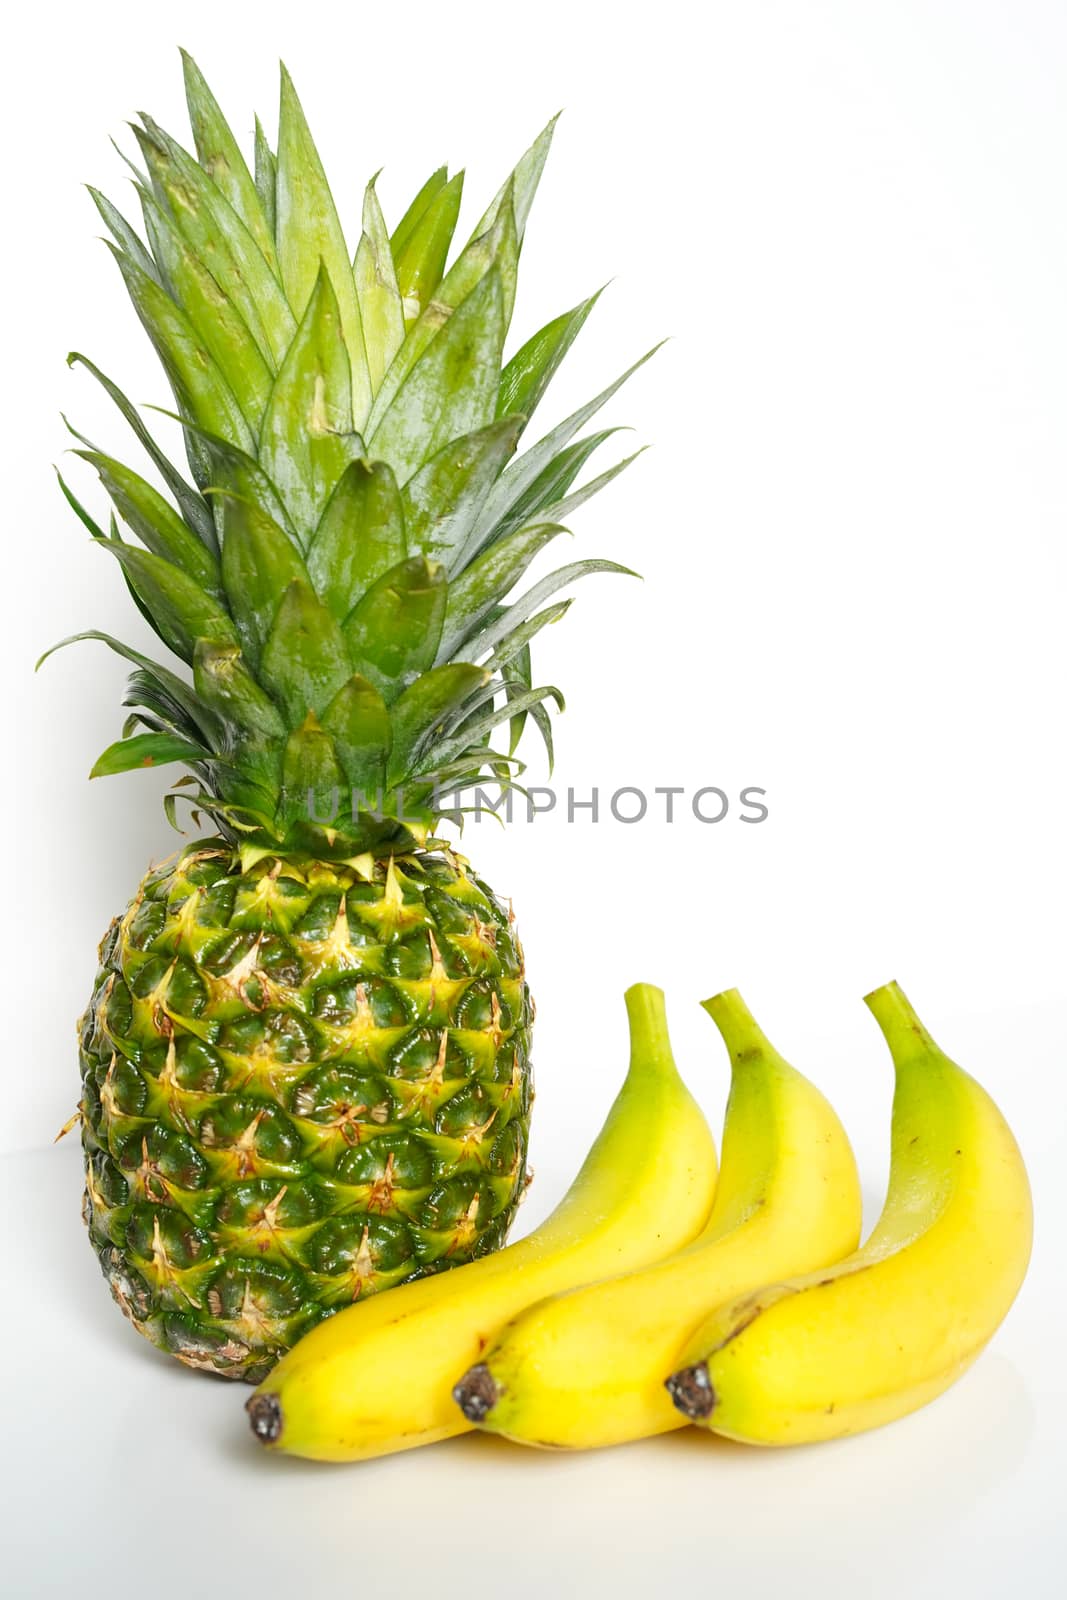 Pineapple and Bananas by samULvisuals